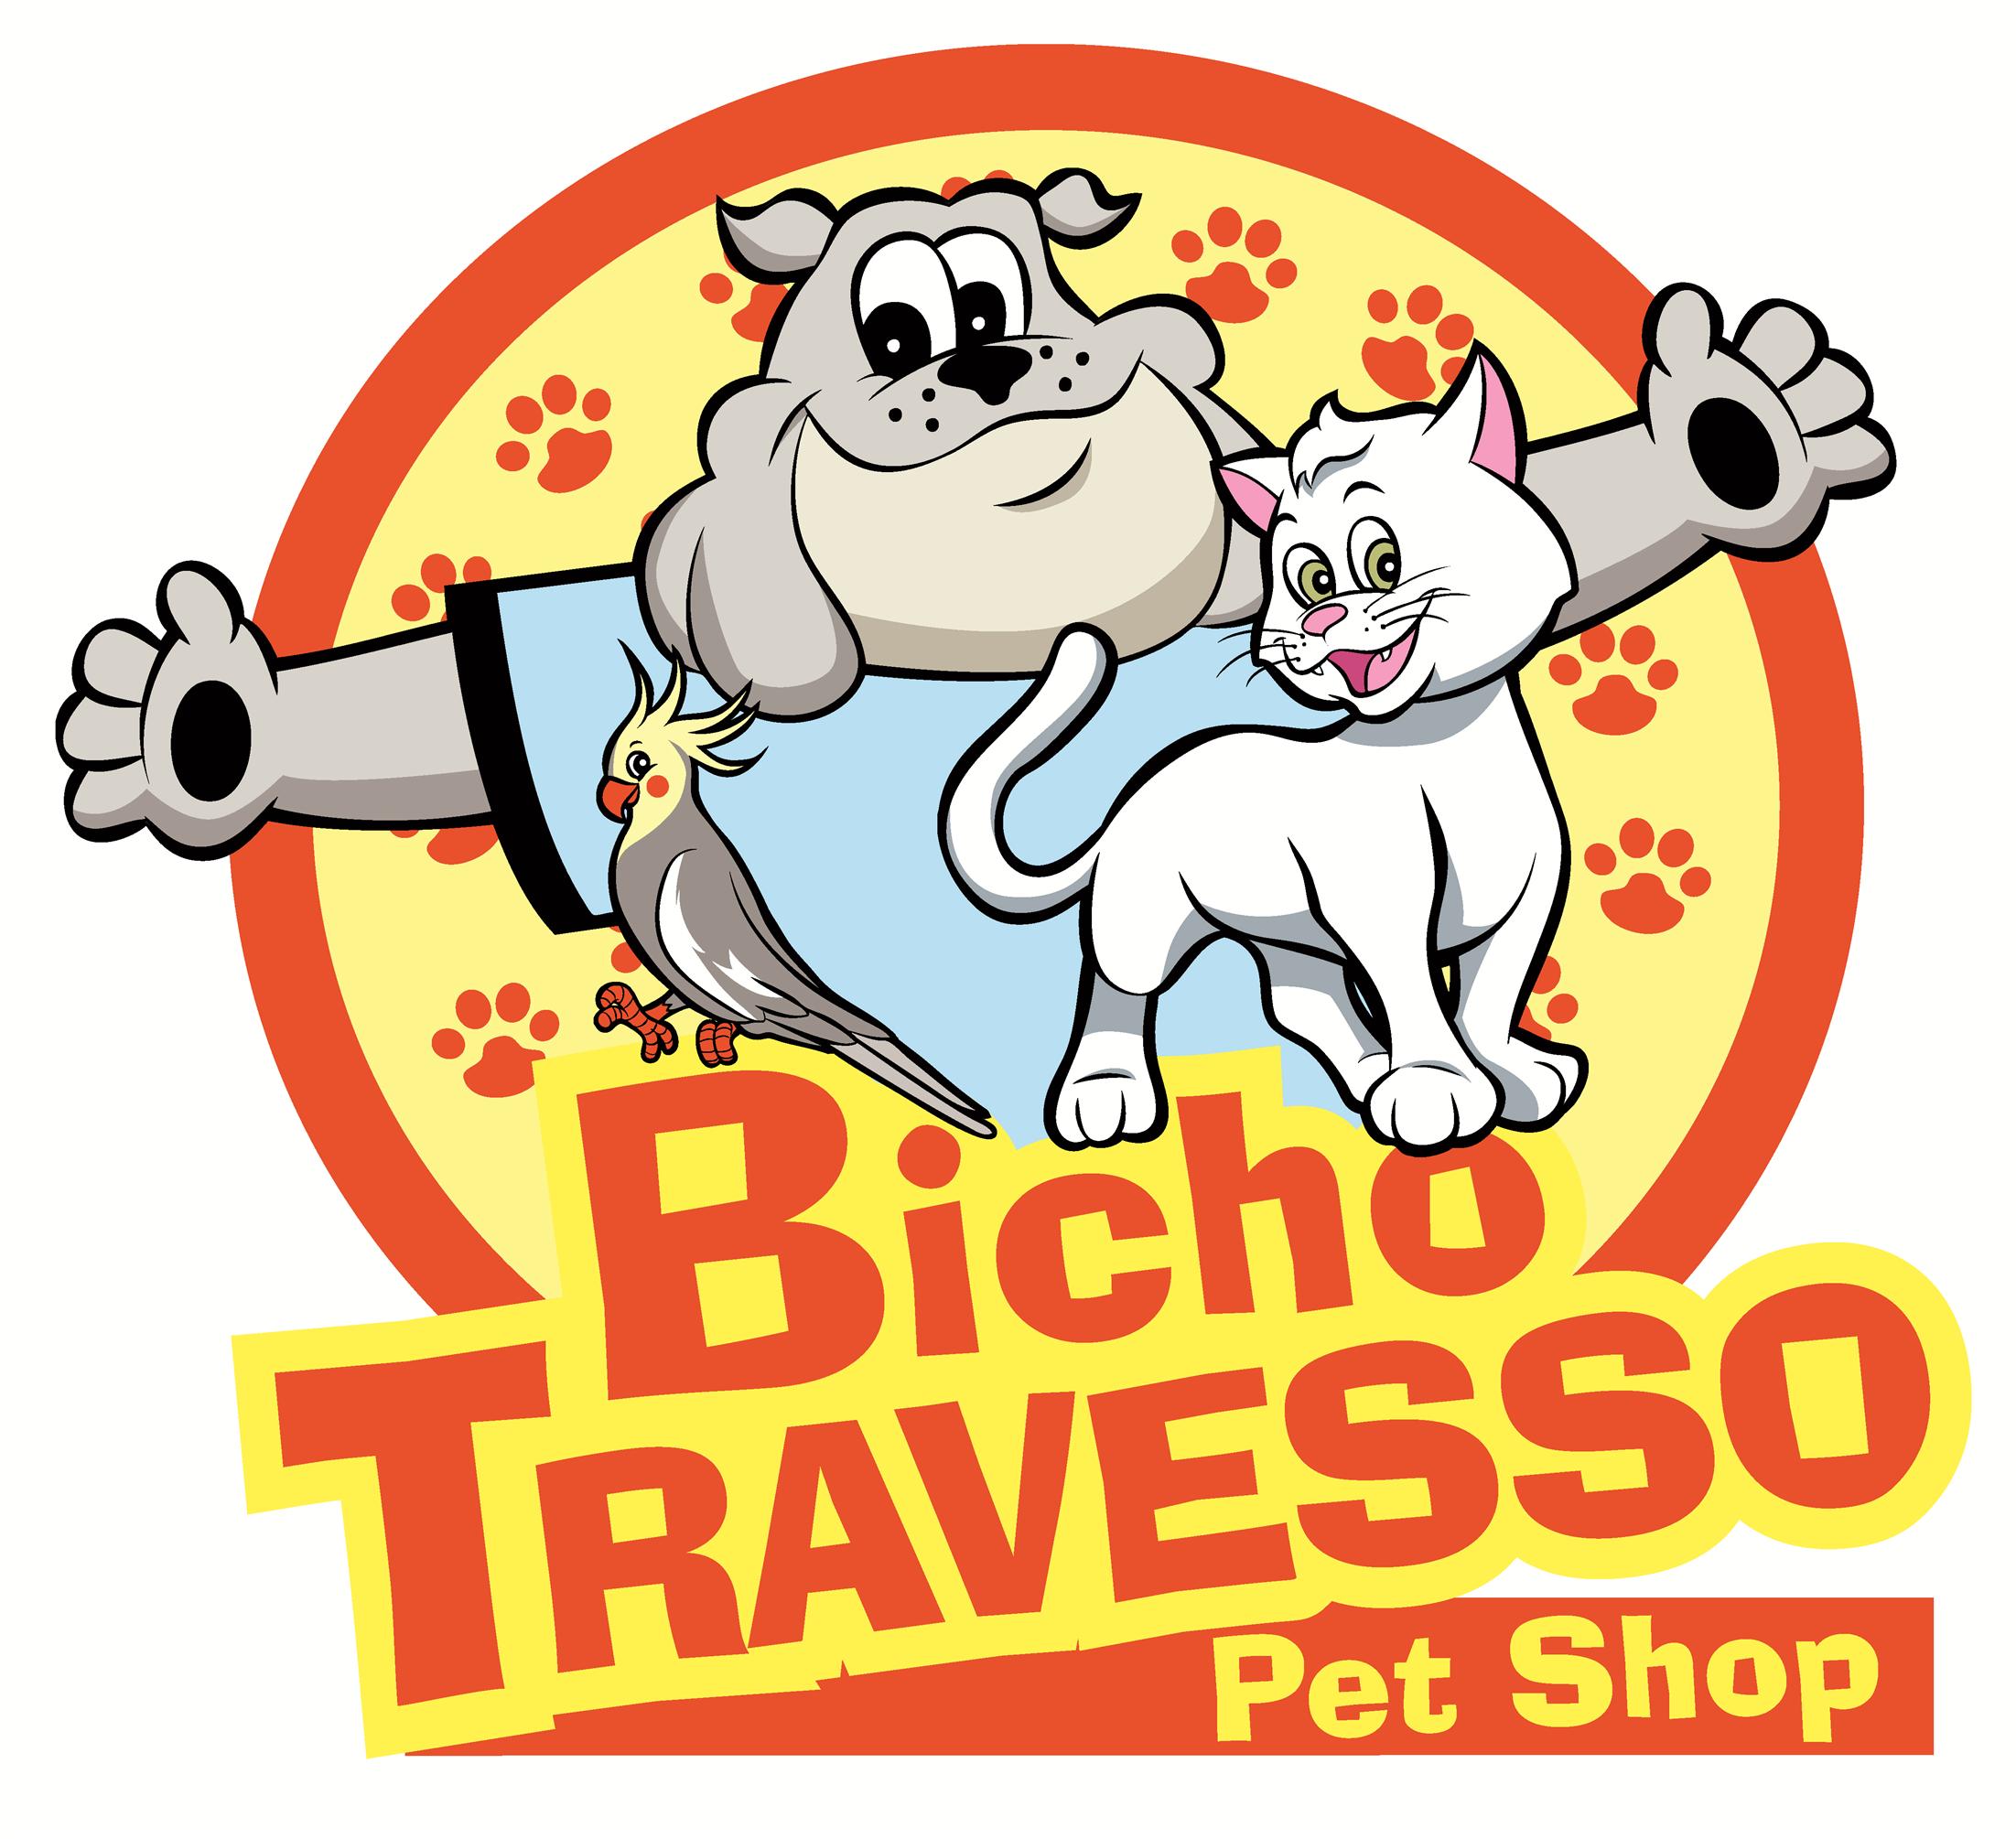 PET SHOP BICHO TRAVESSO logo